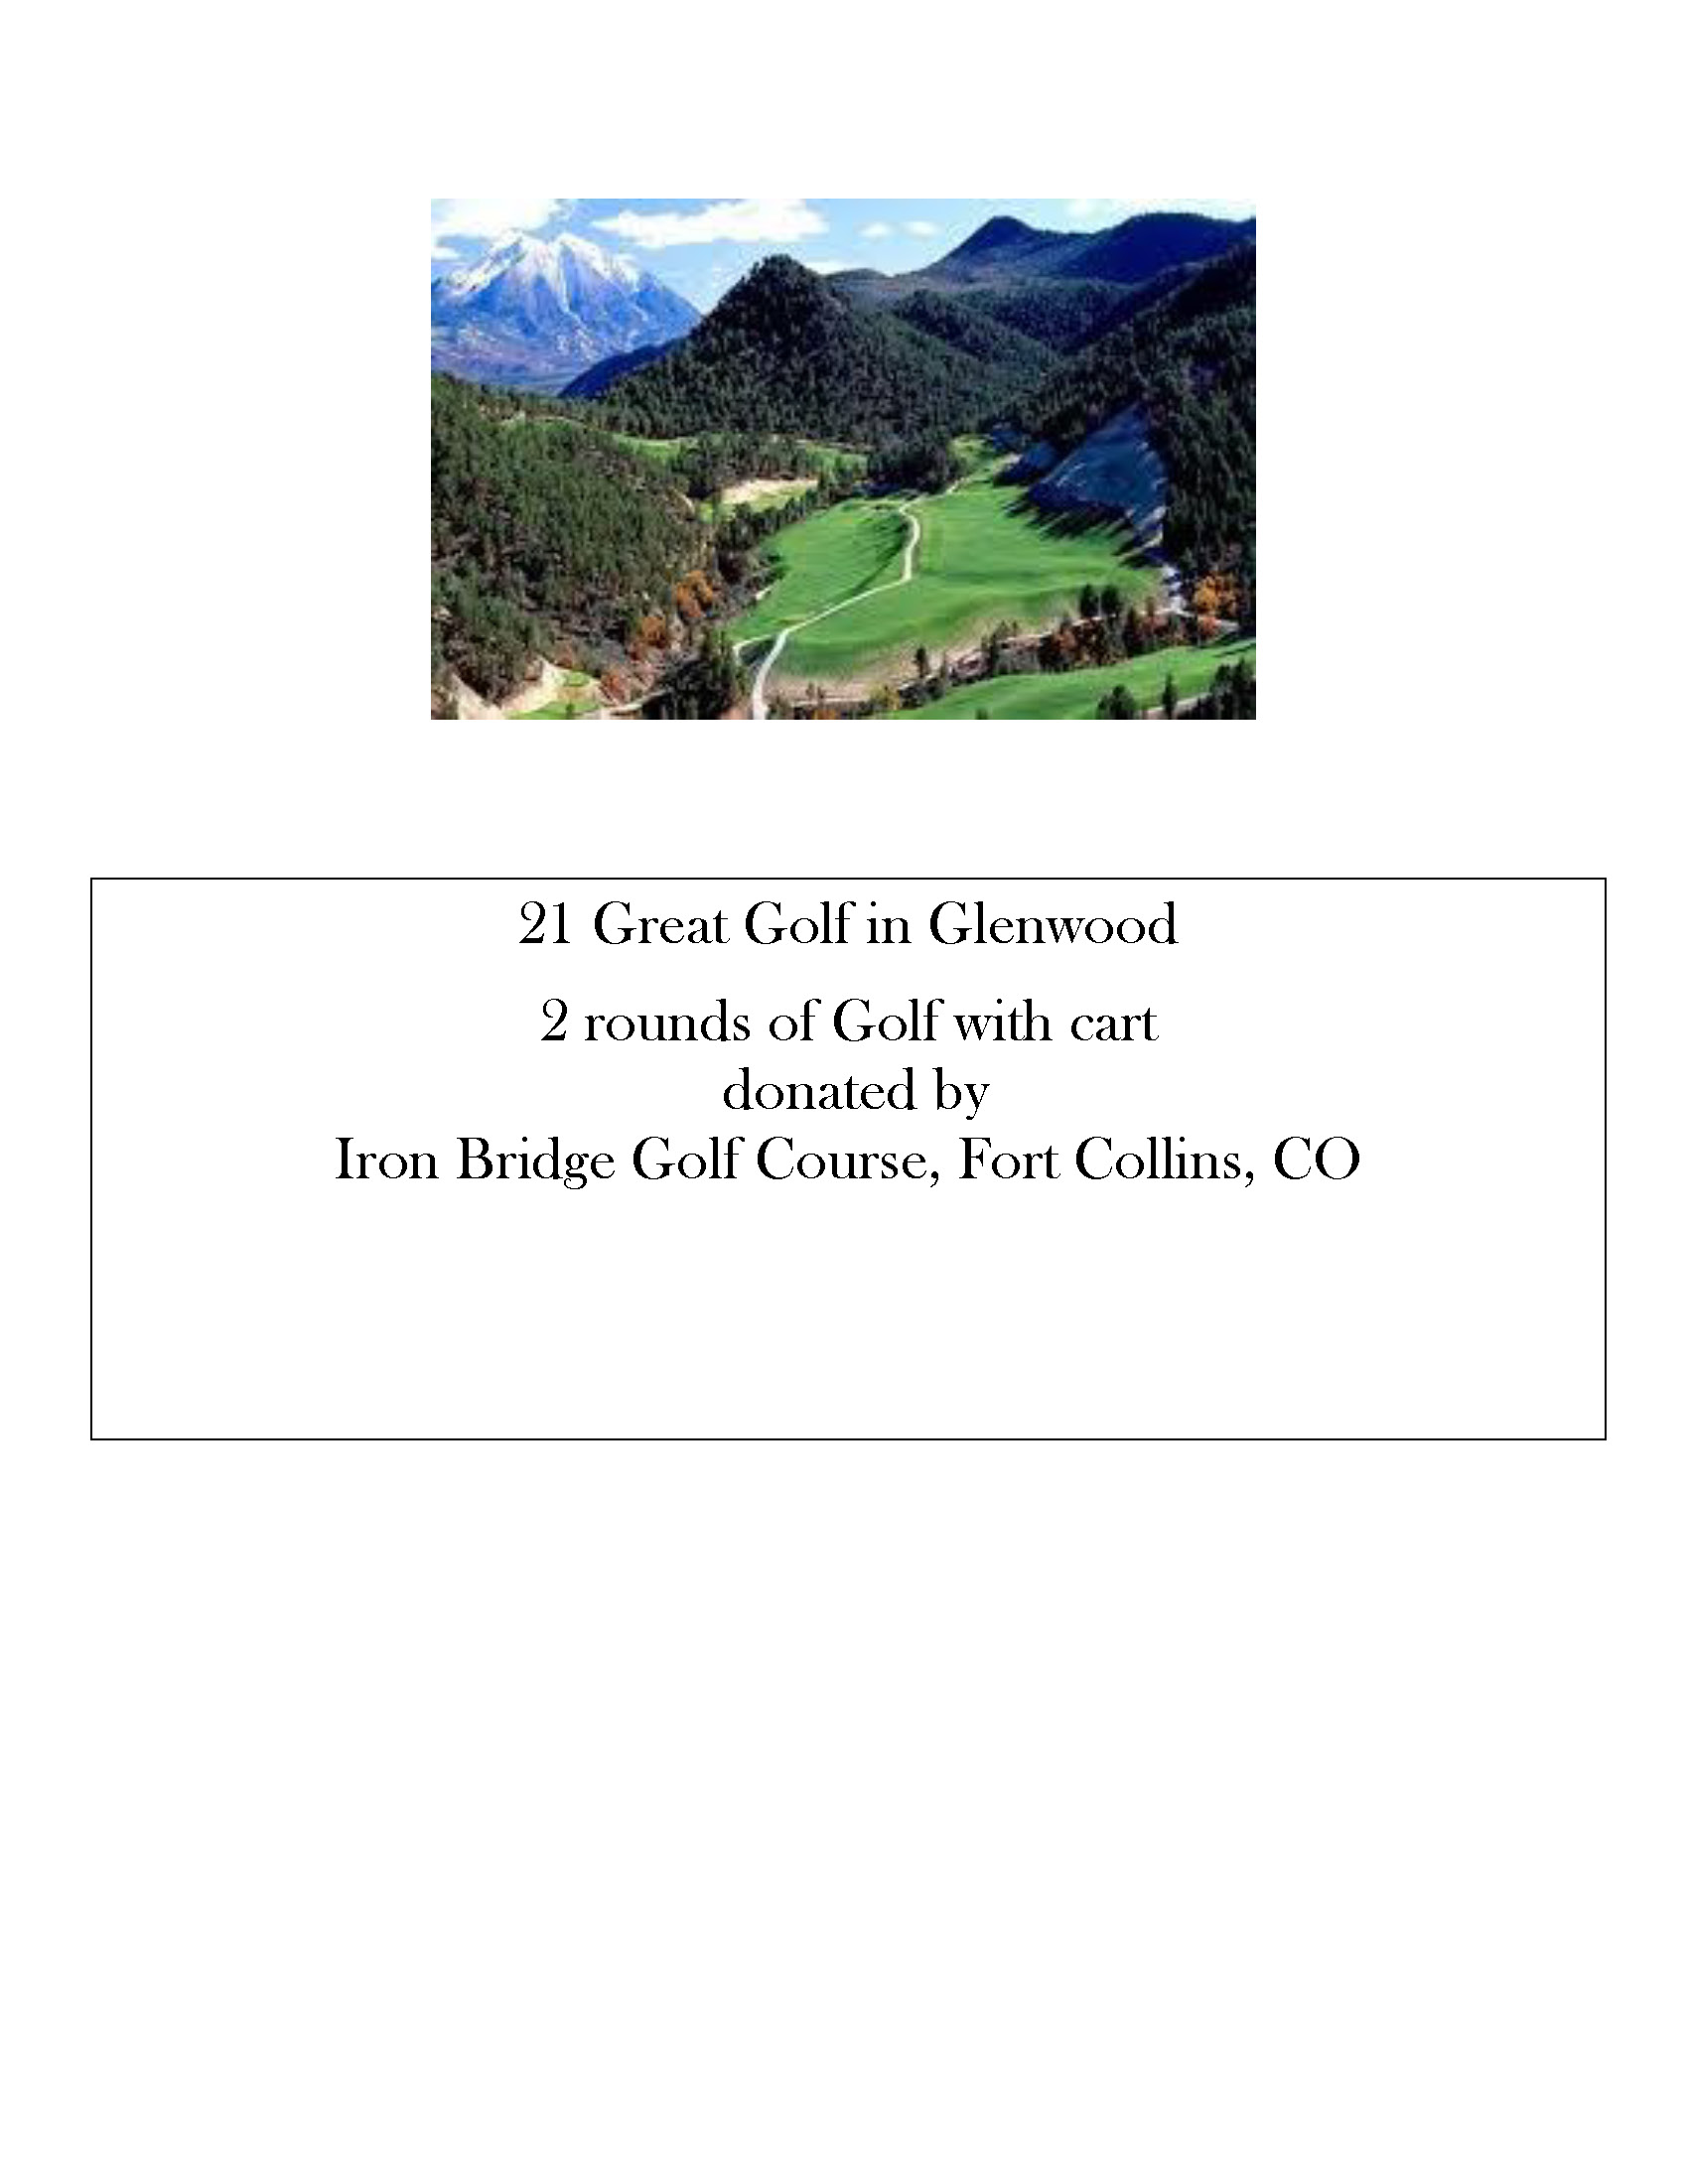 21-Great-Golf-in-Glenwood-docx-5dc43acbe3670